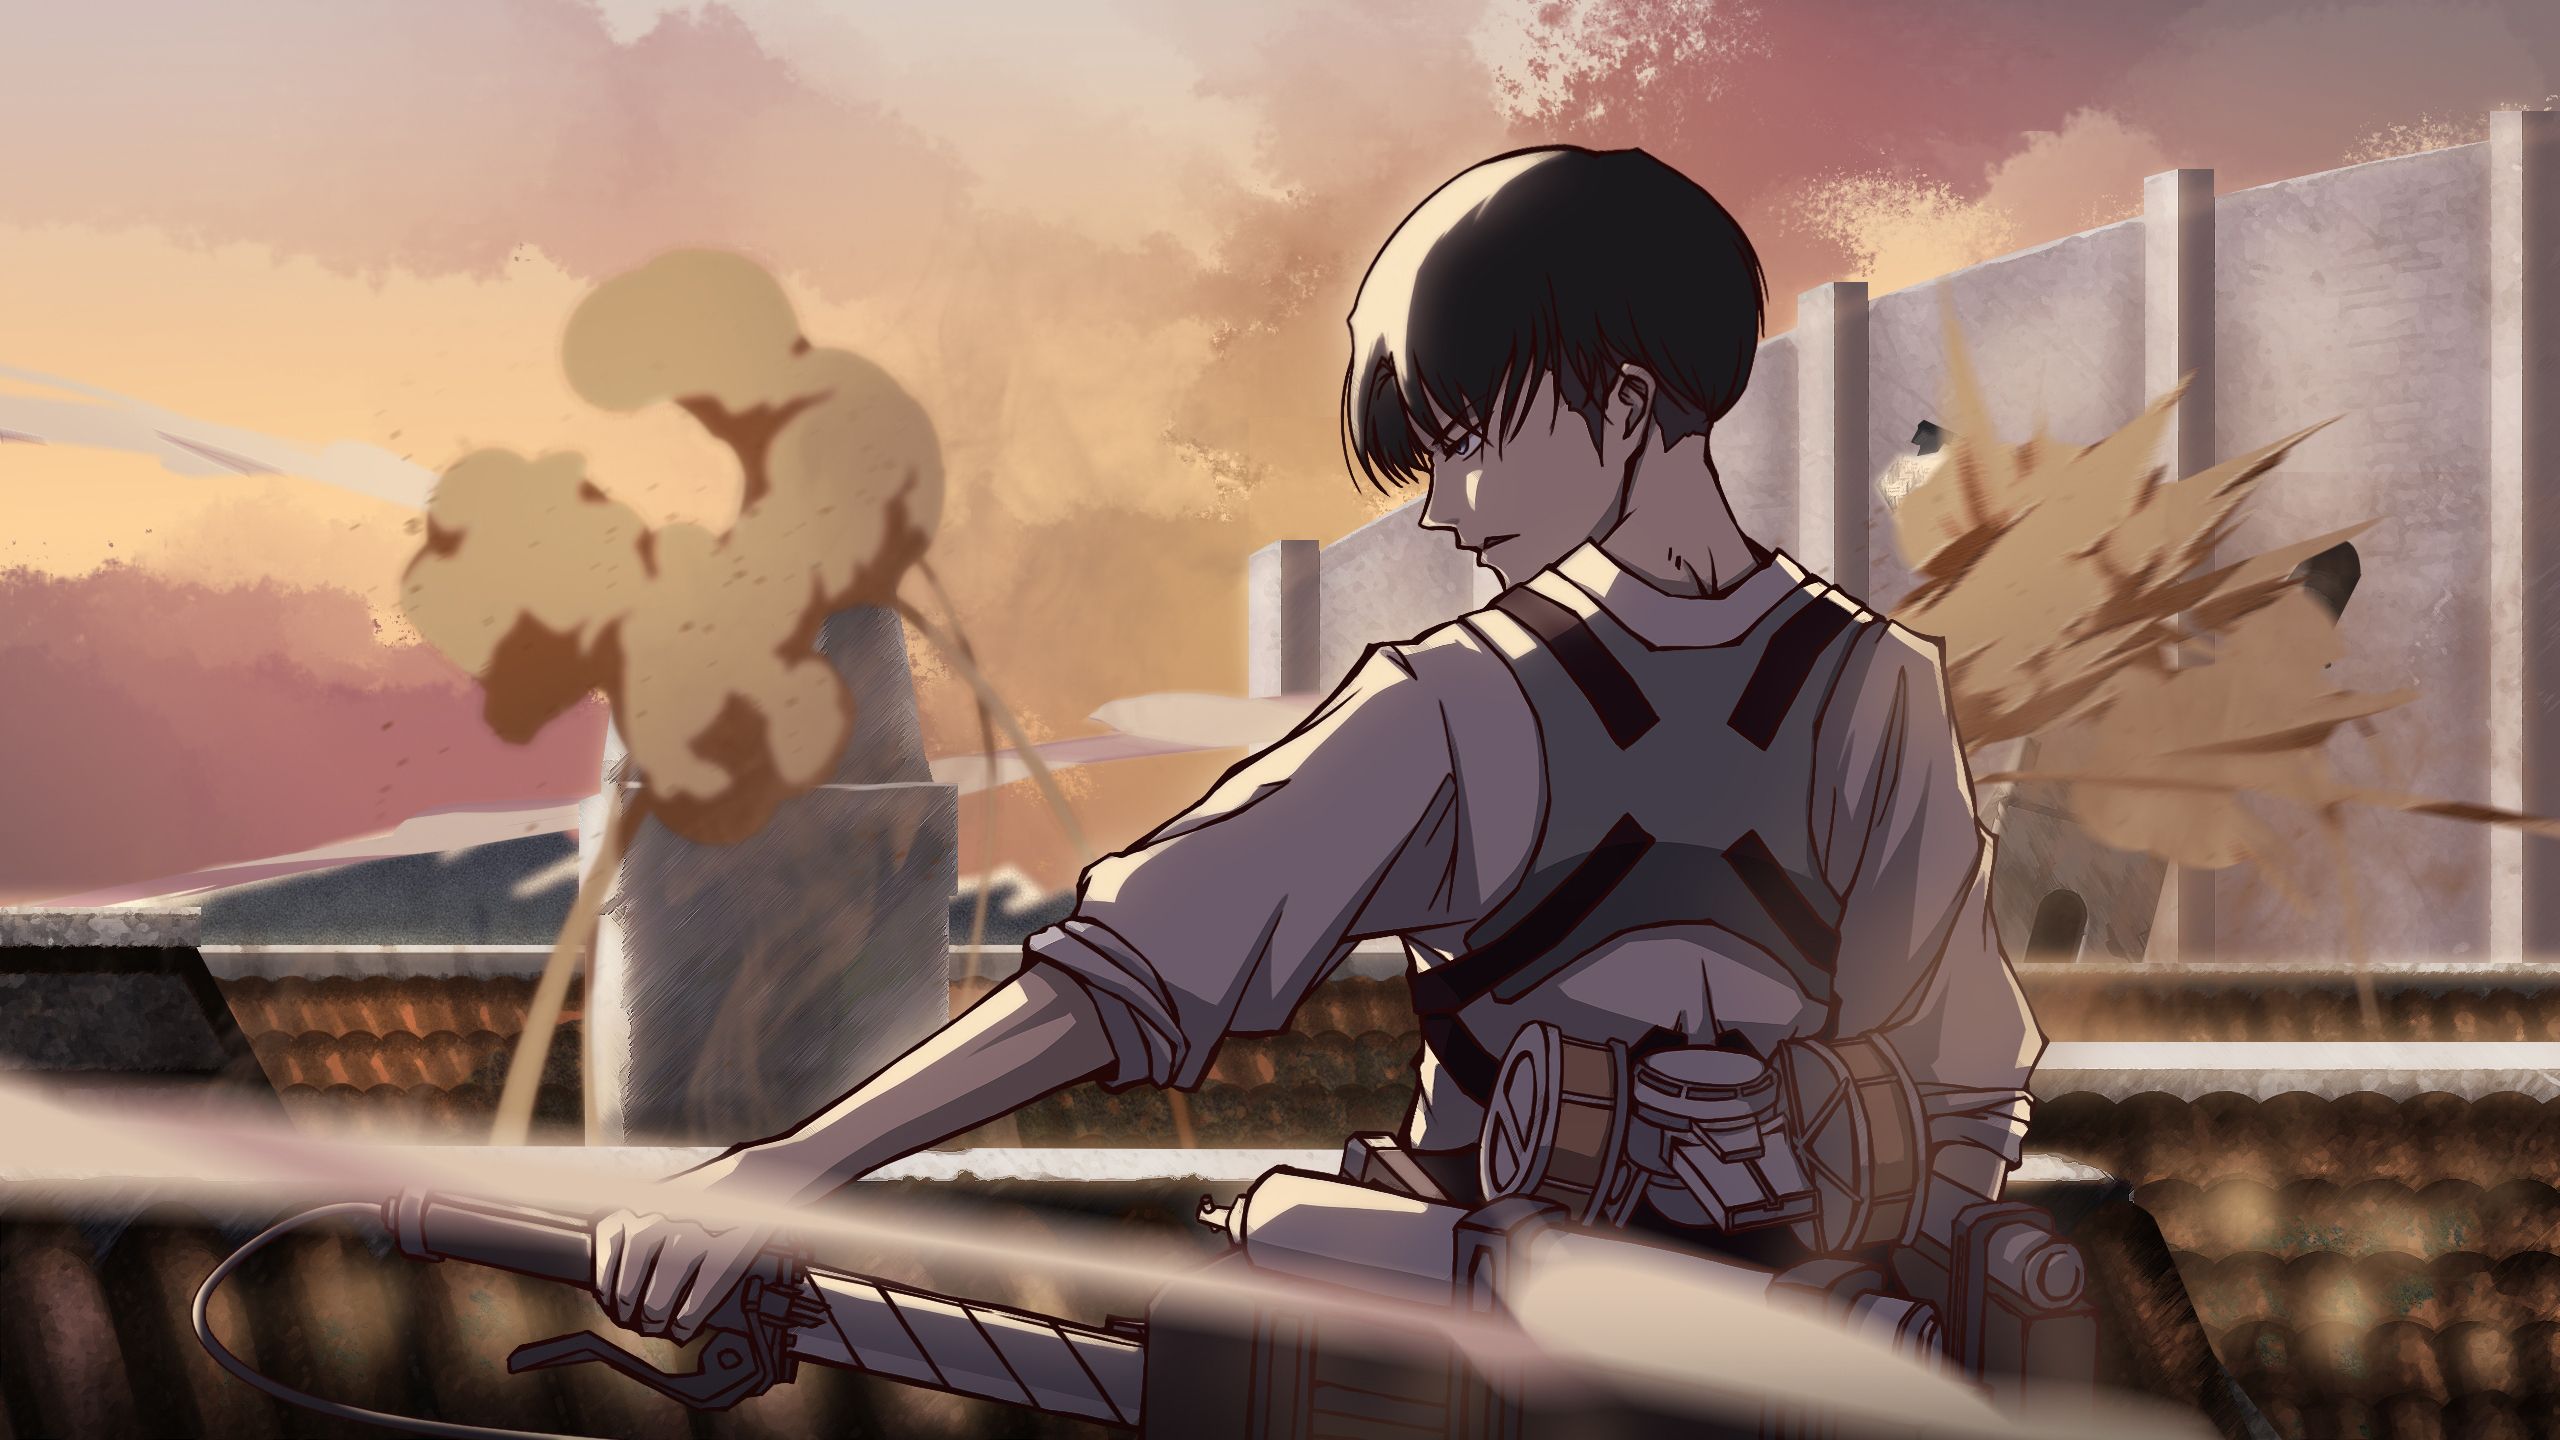 Attack On Titan Levi Ackerman Going To Take Sword To Fight HD Anime Wallpaper